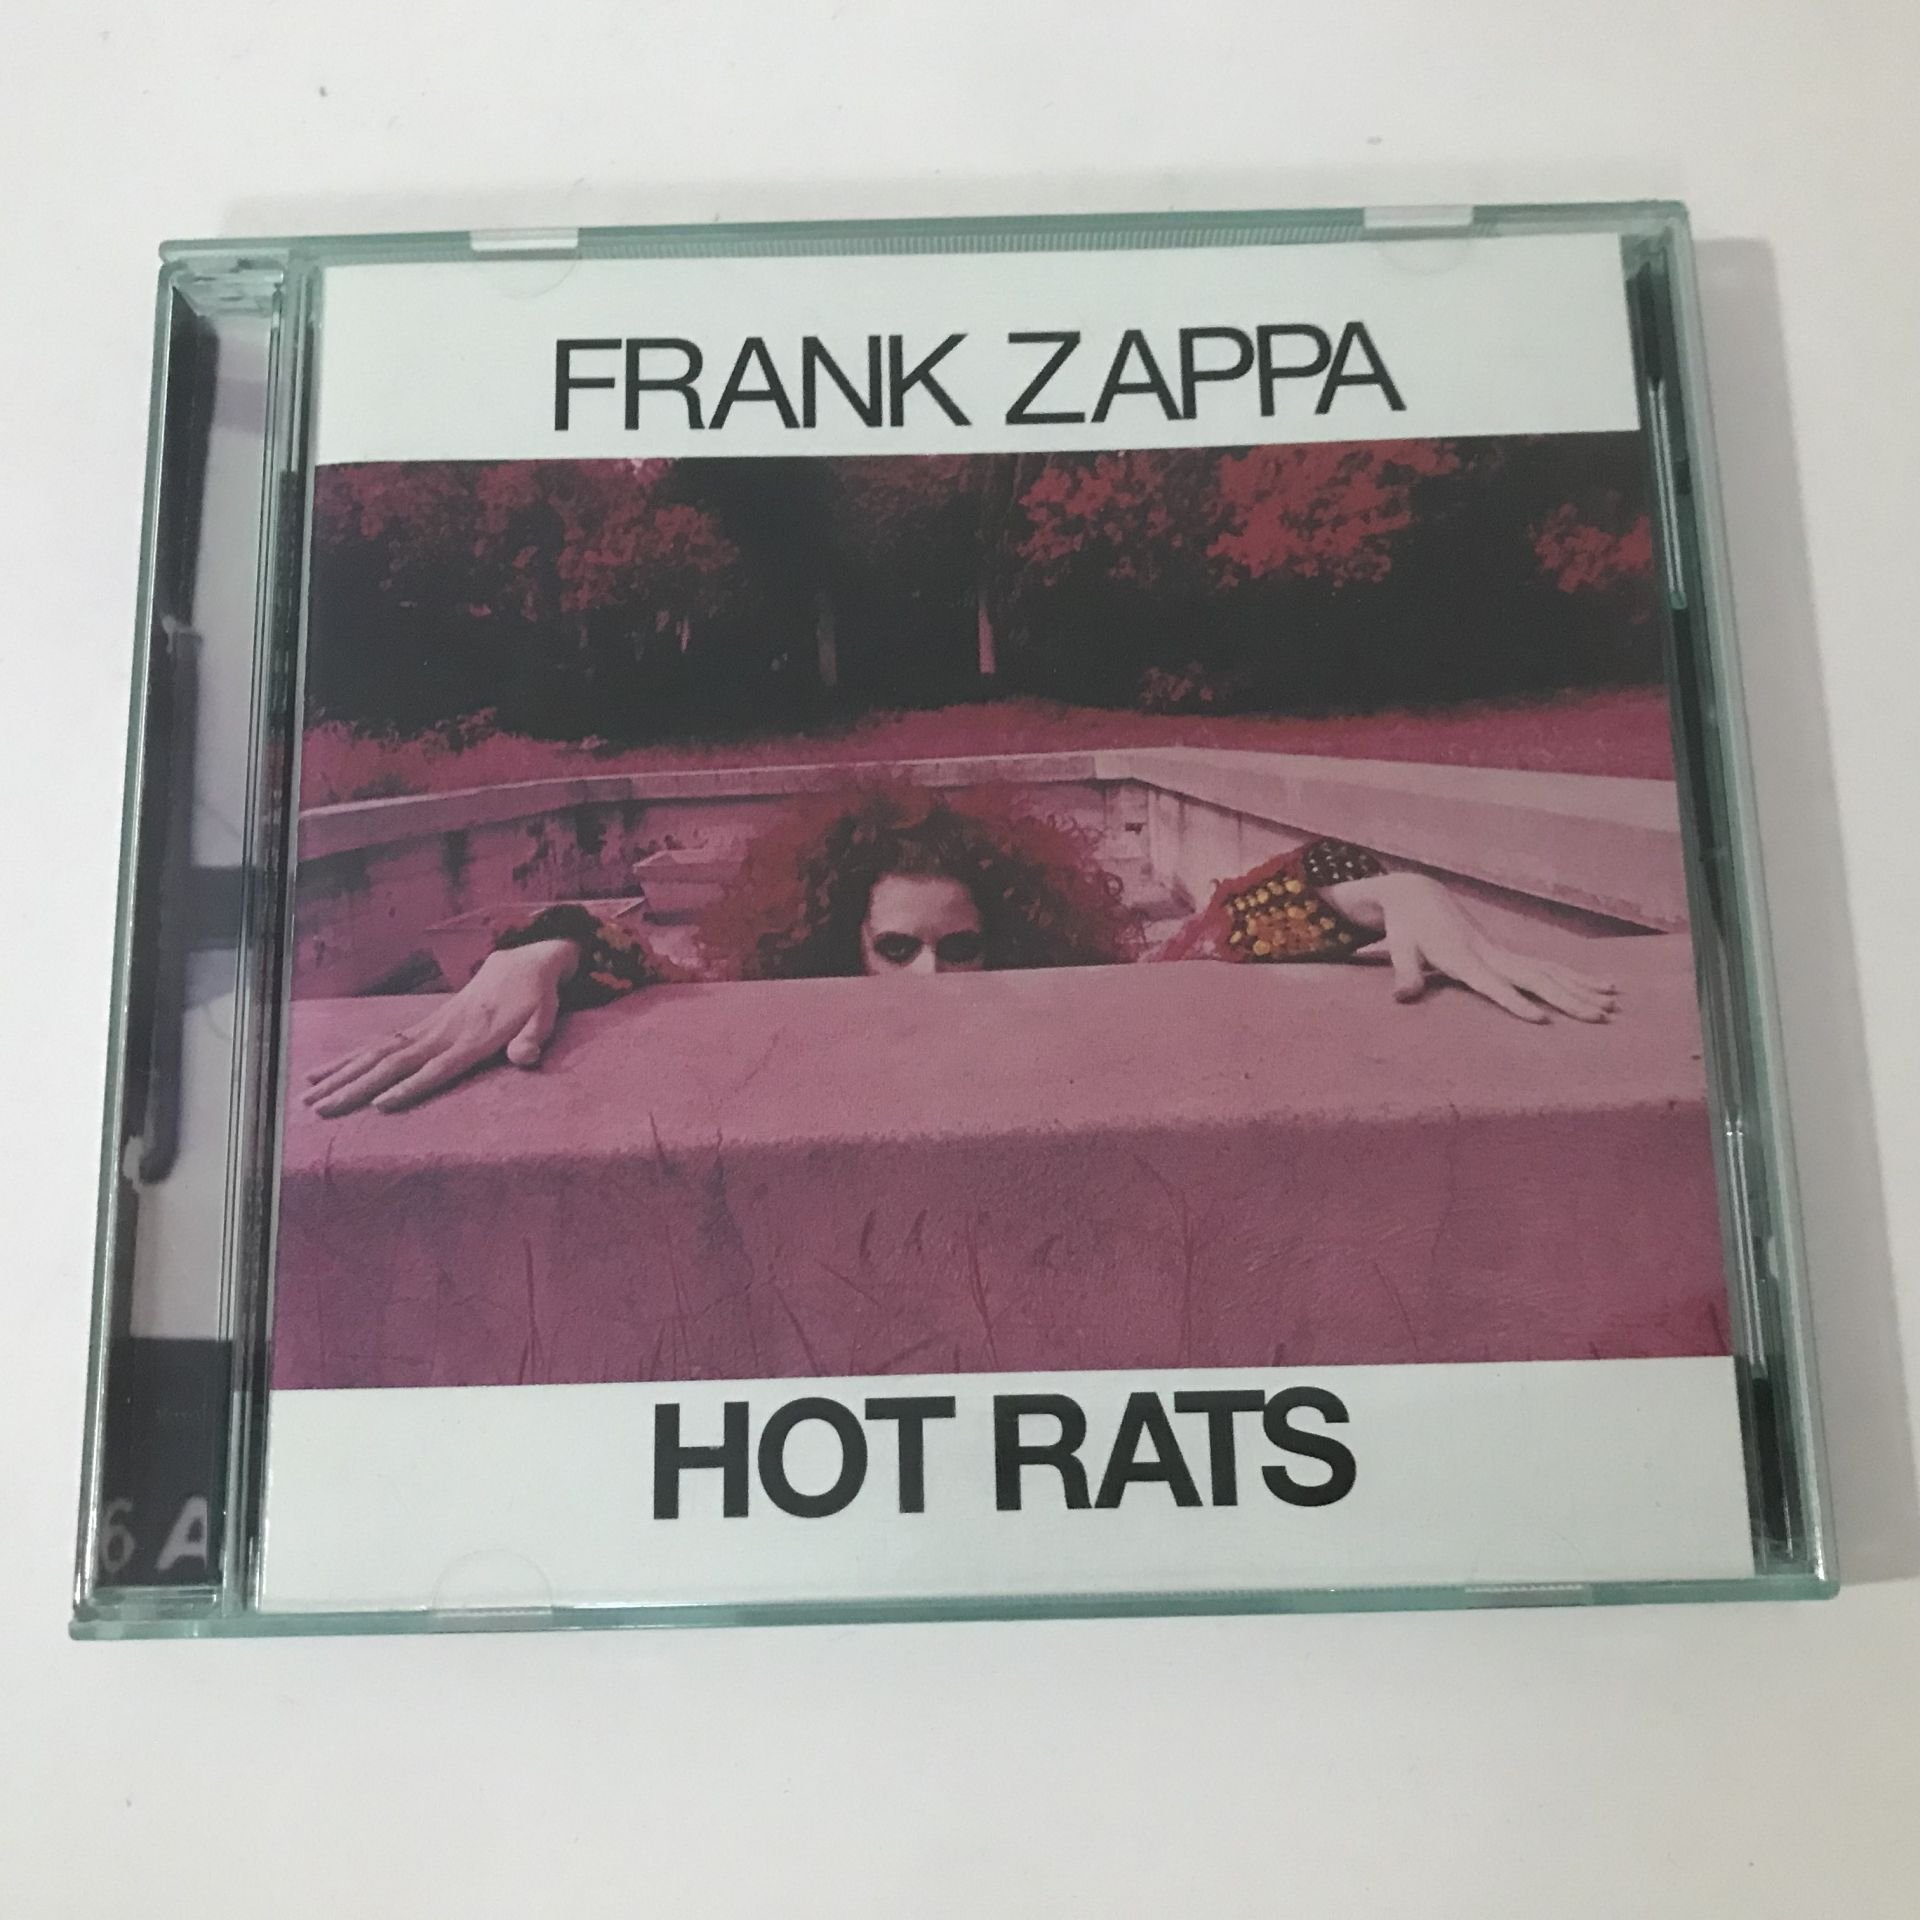 Frank Zappa – Hot Rats